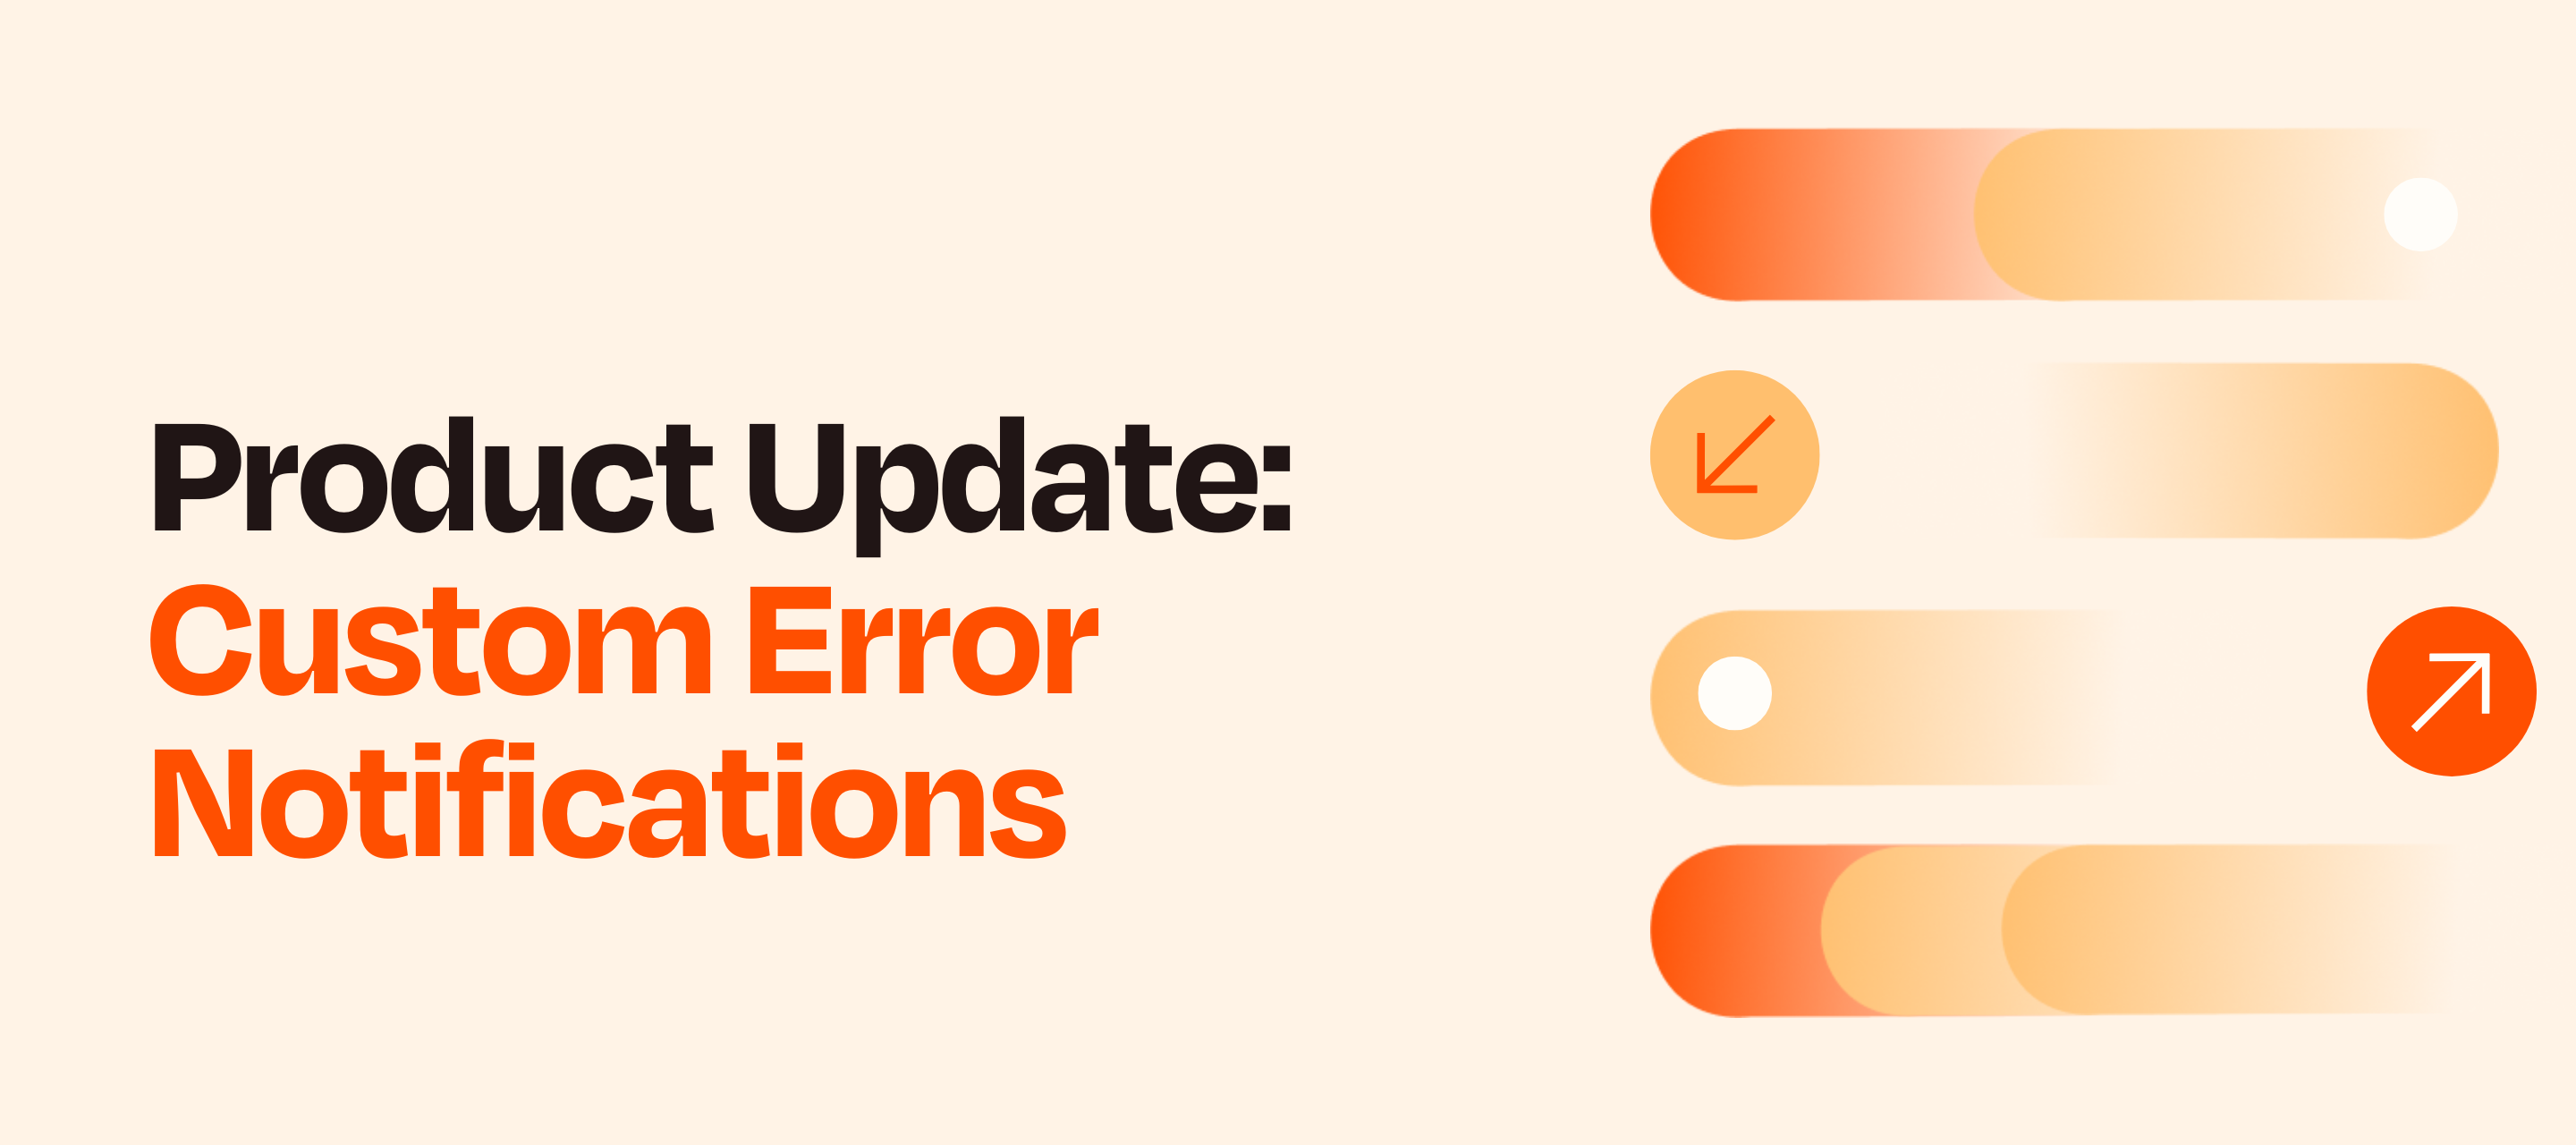 Product Update: Custom Error Notifications